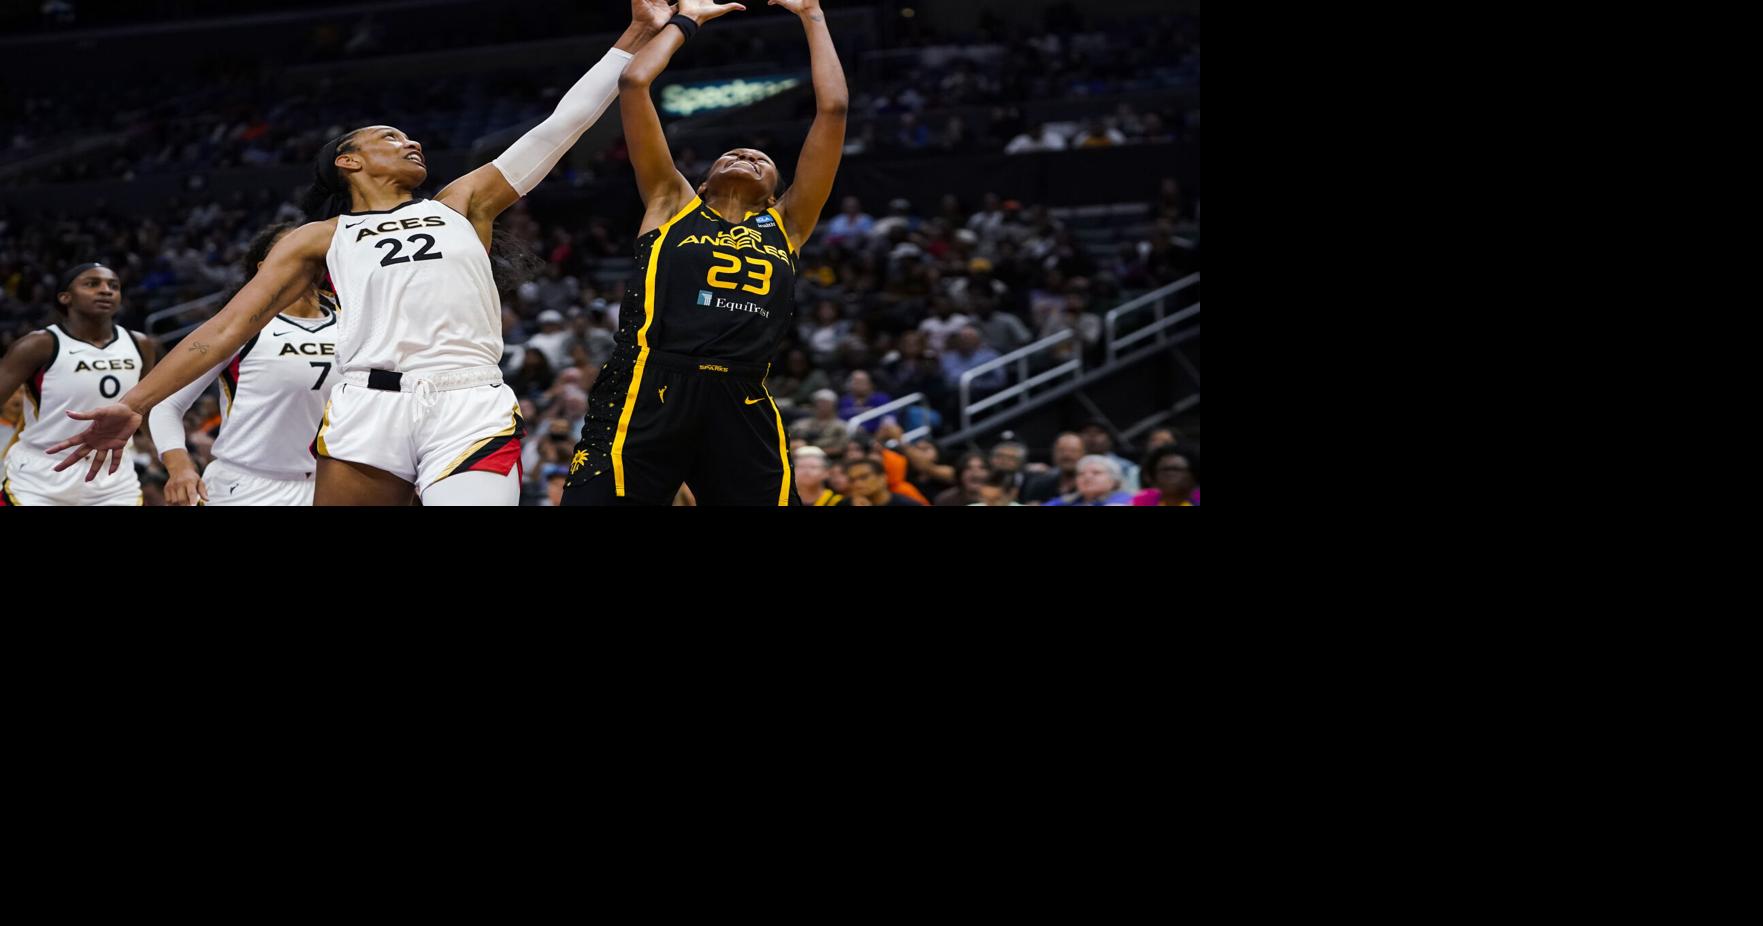  WNBA Las Vegas Aces Ace High T-Shirt : Sports & Outdoors